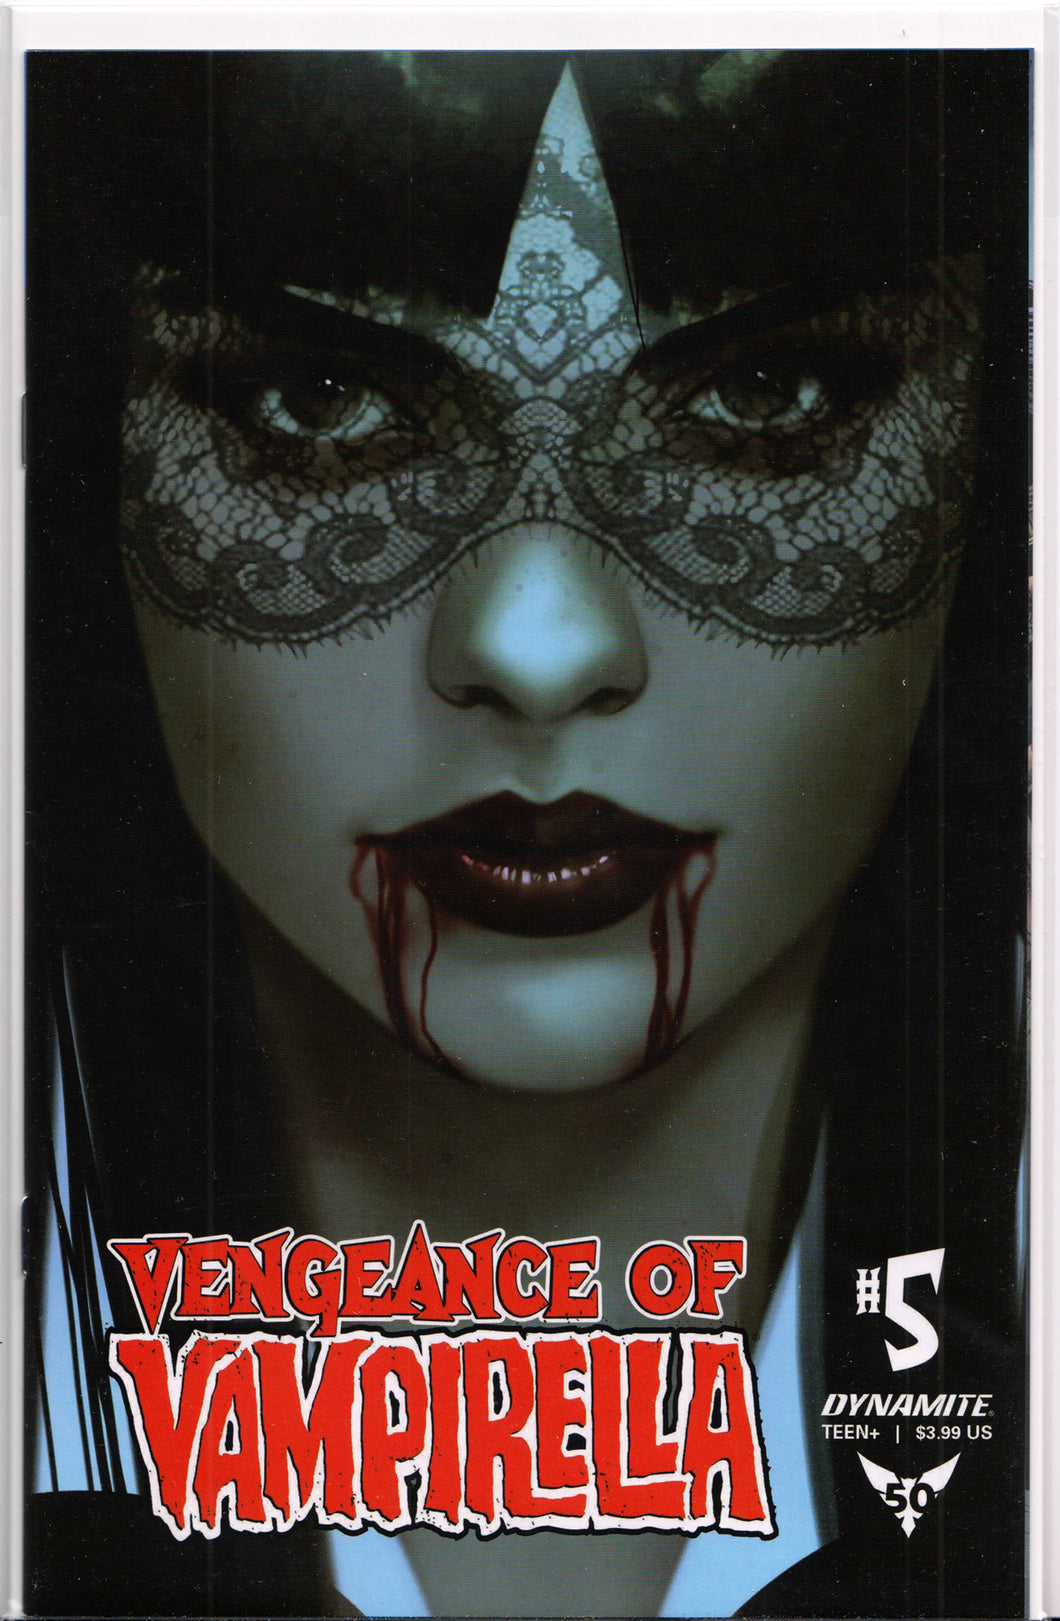 VENGEANCE OF VAMPIRELLA #5 (BEN OLIVER VARIANT) COMIC BOOK ~ Dynamite